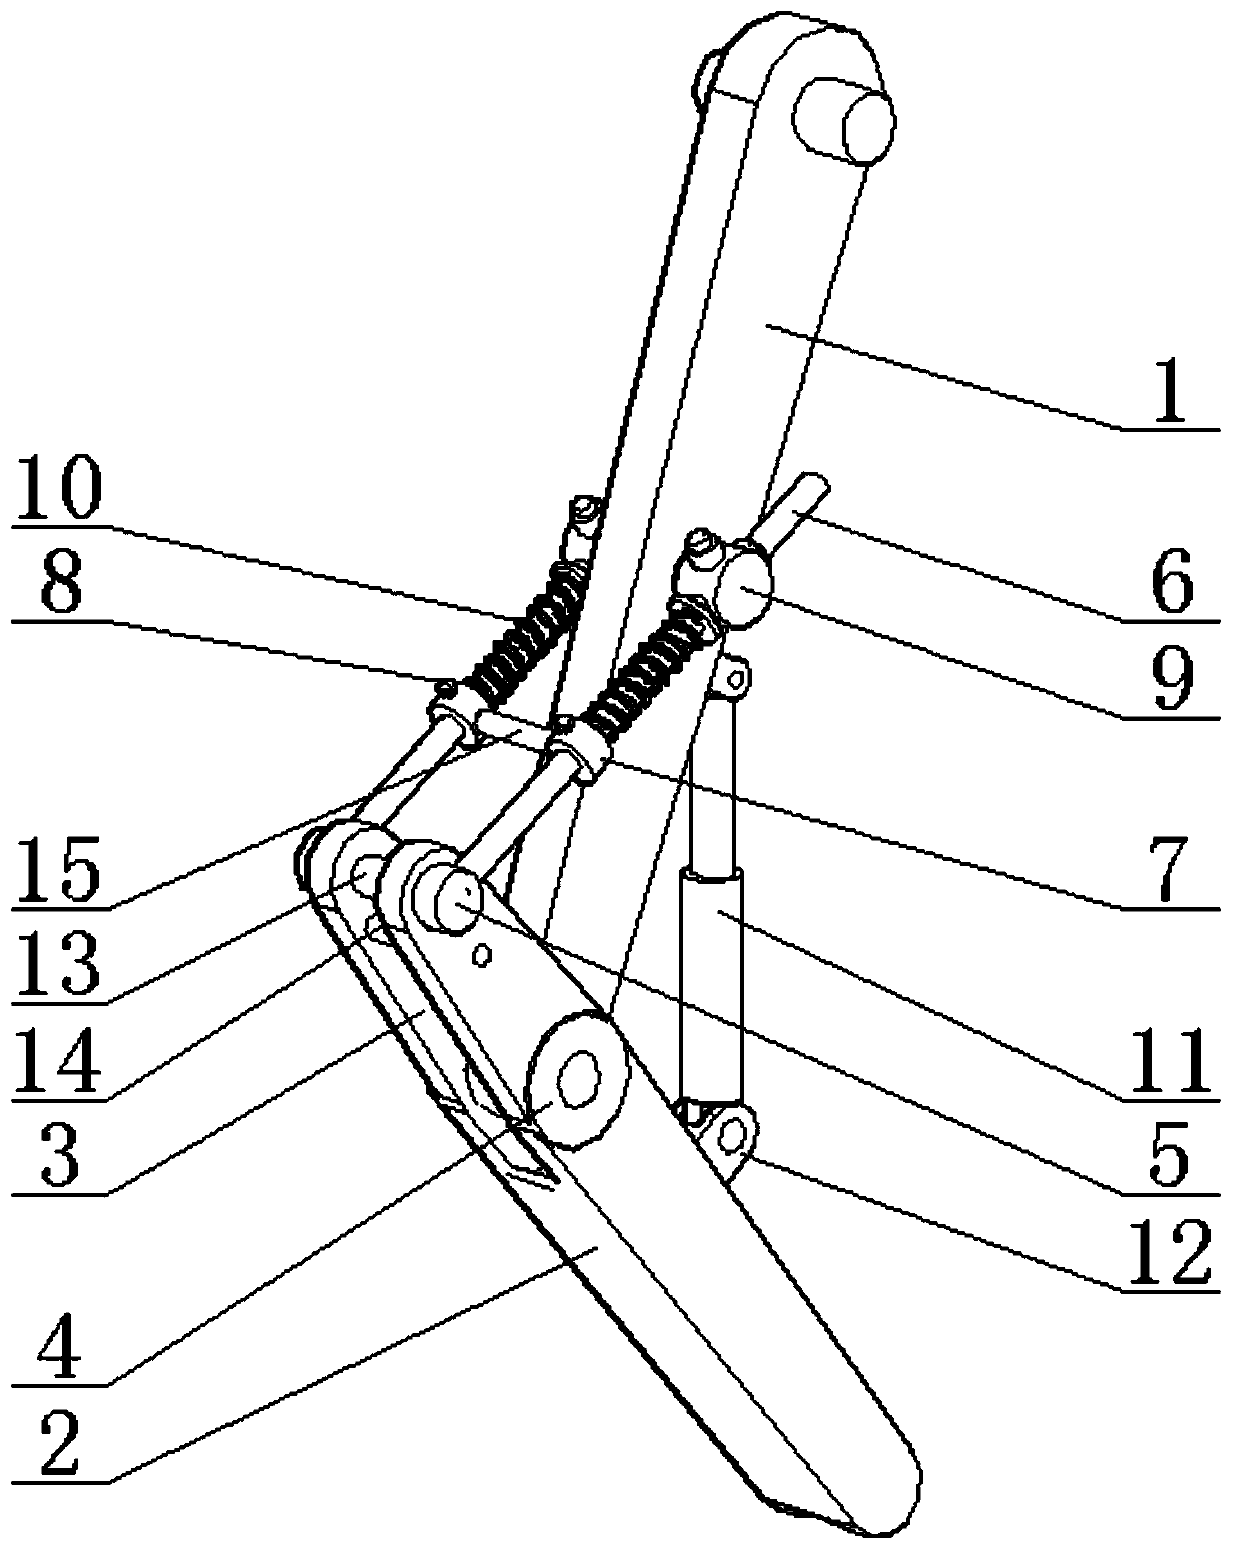 Leg structure of jumping robot